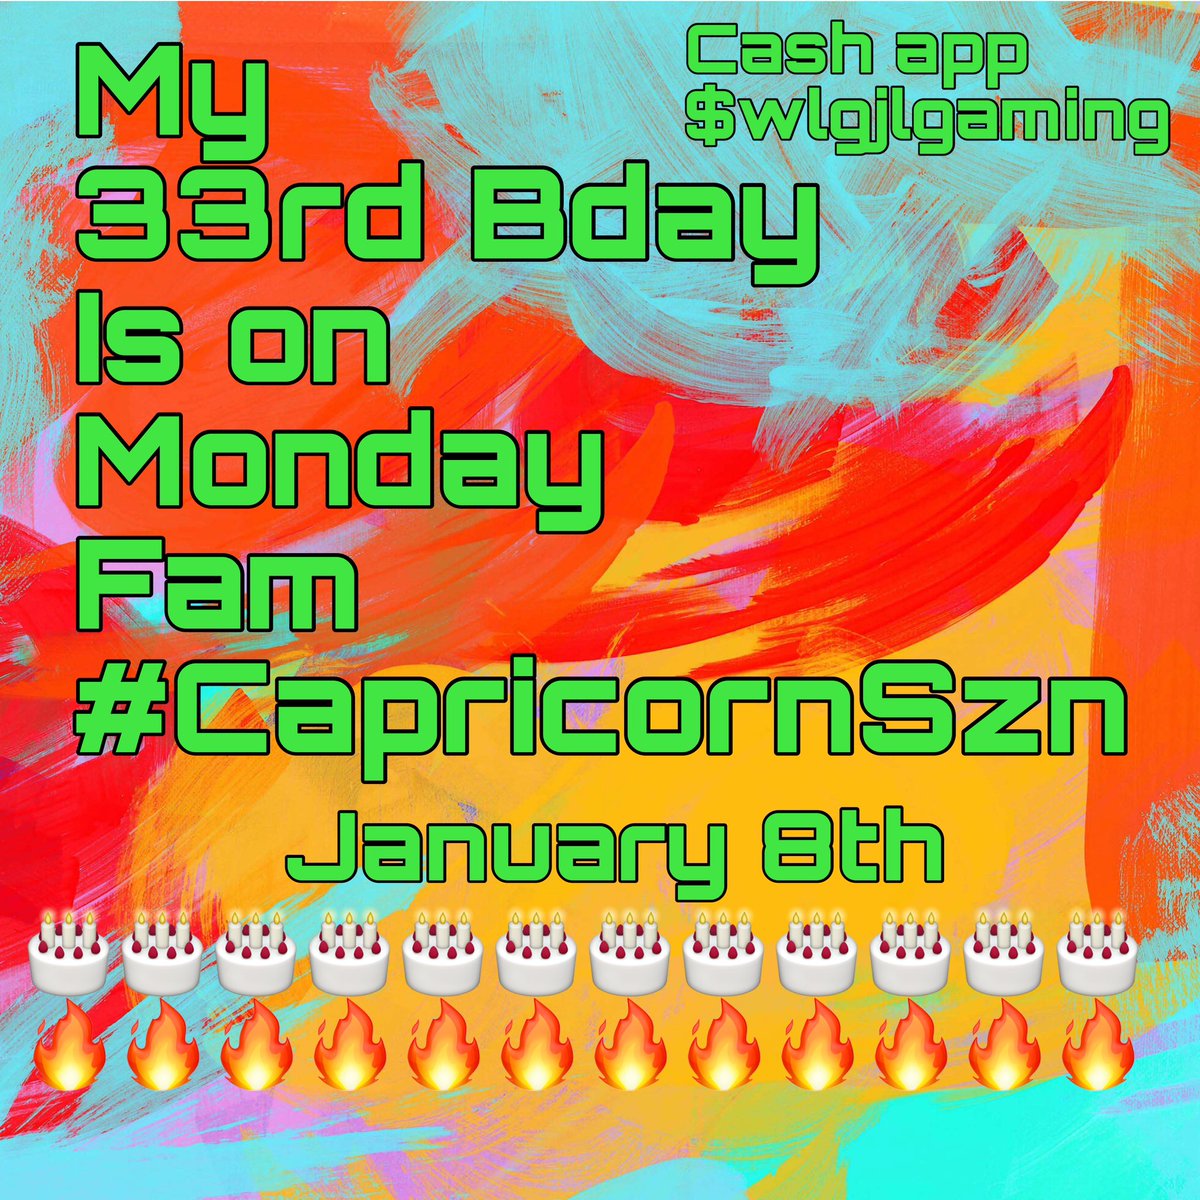 Bday on Monday yall #Capricorn #CapricornSeason #teamcapricorn #Jan8th #January